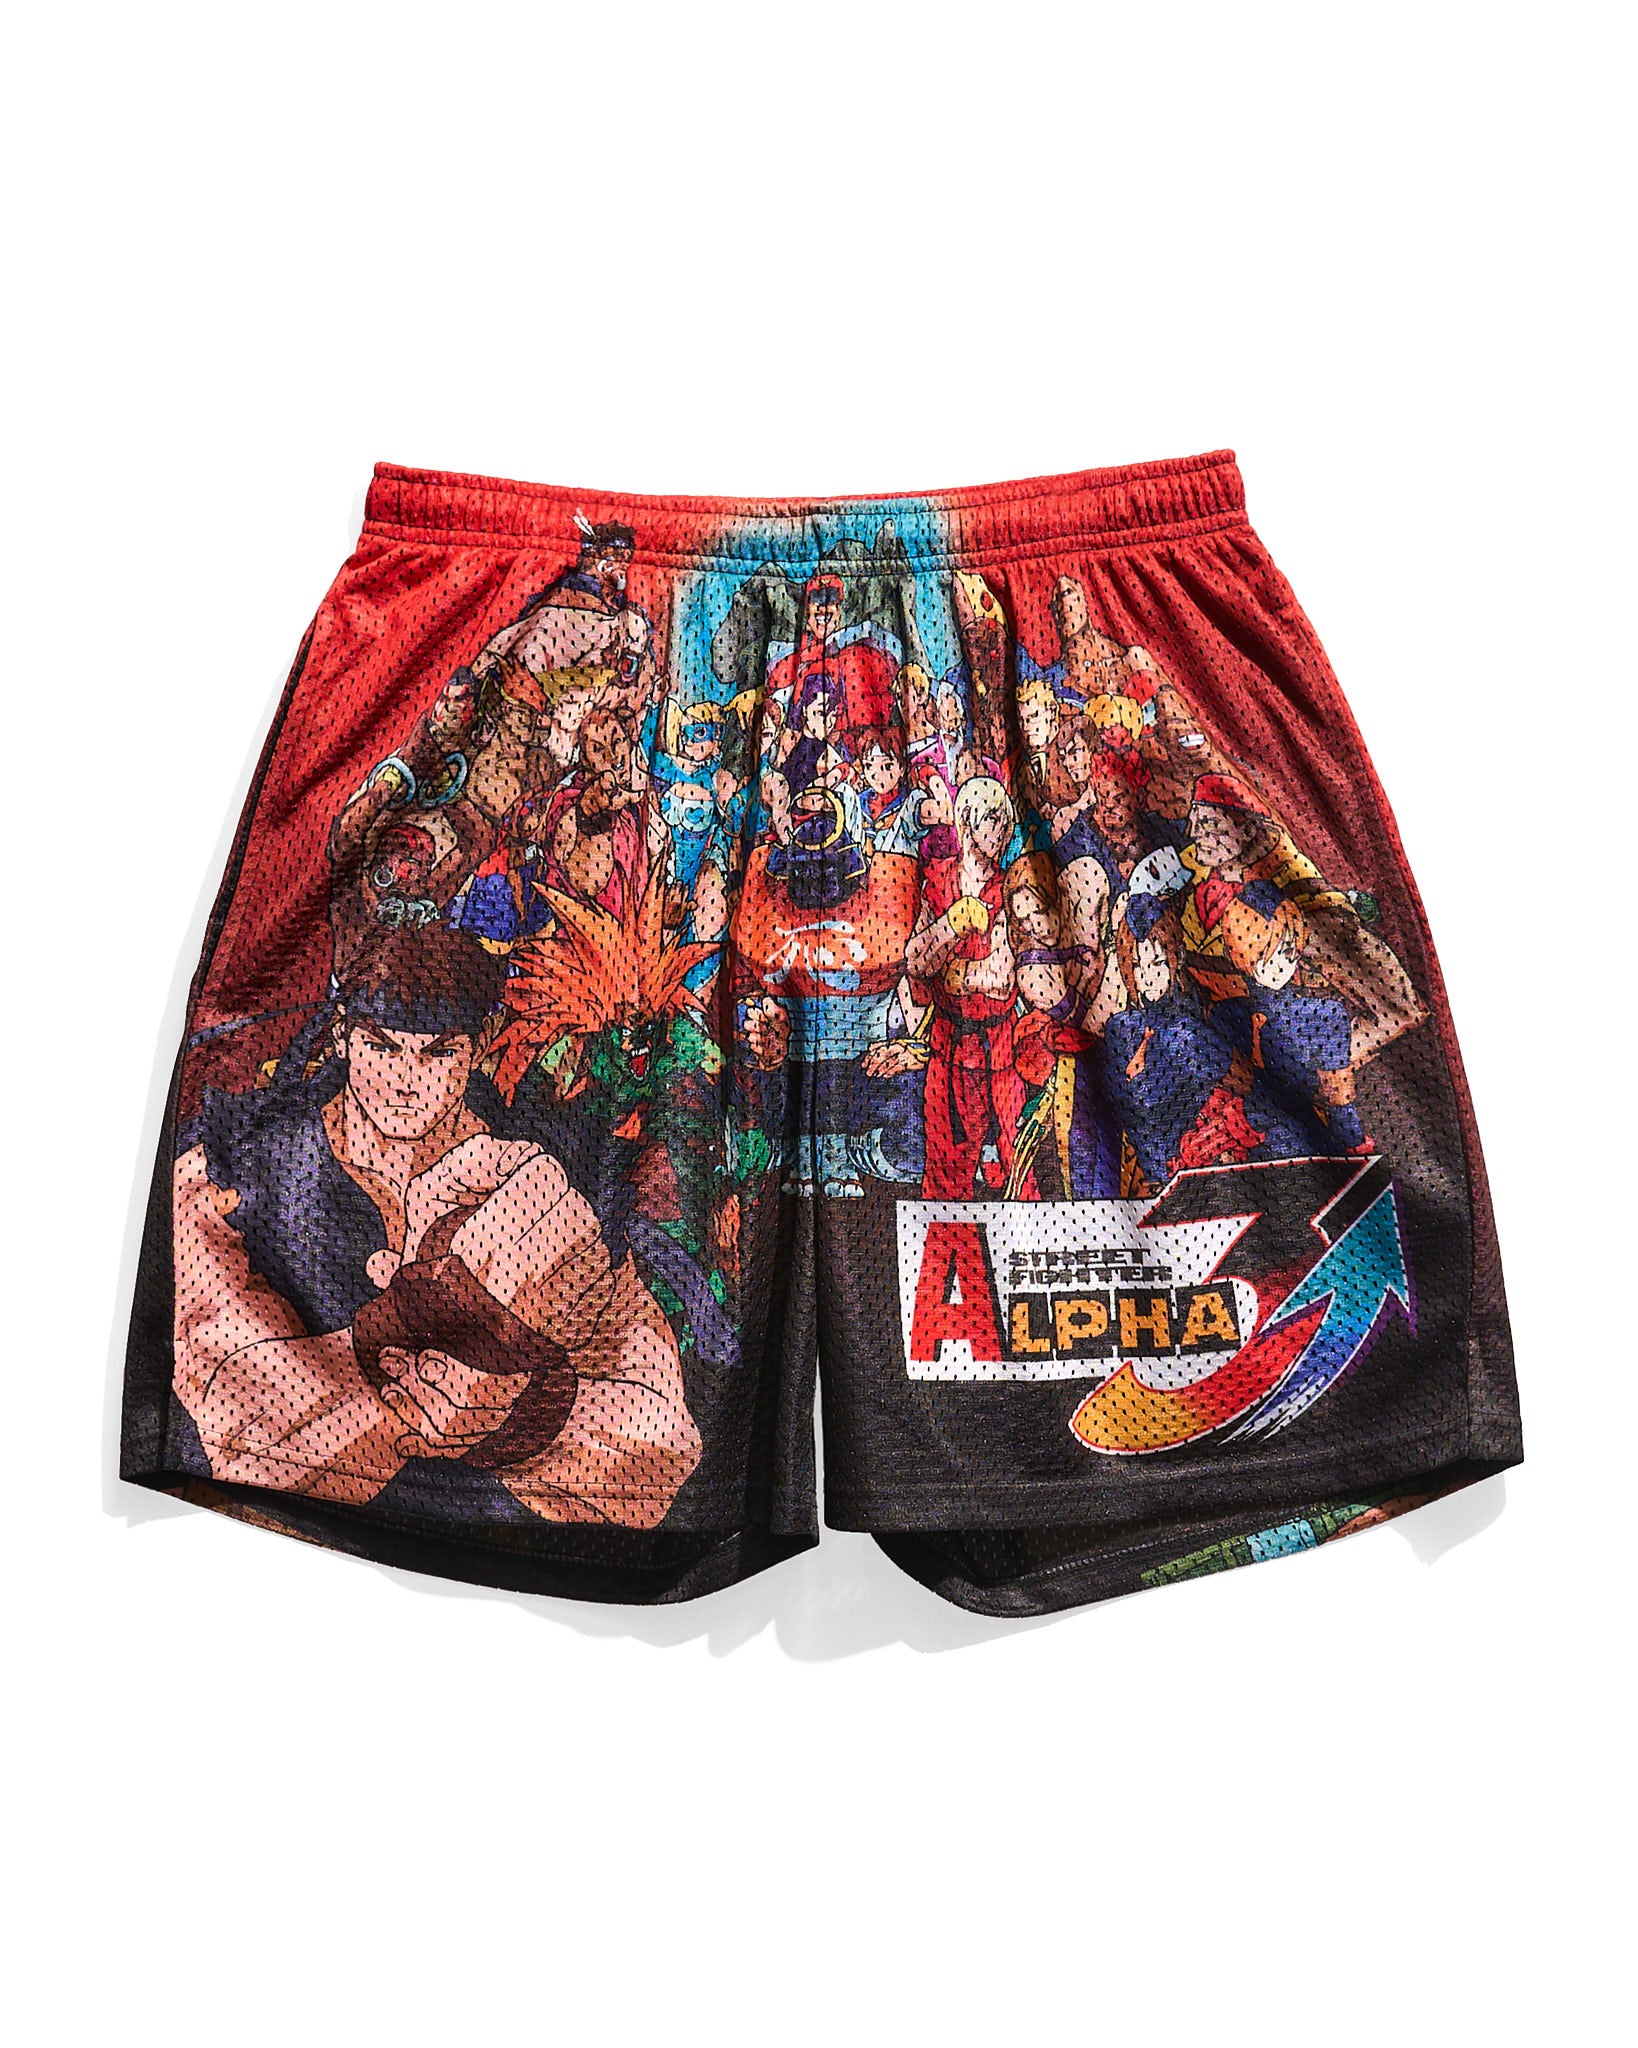 Street Fighter Alpha 3 Roster Retro Shorts